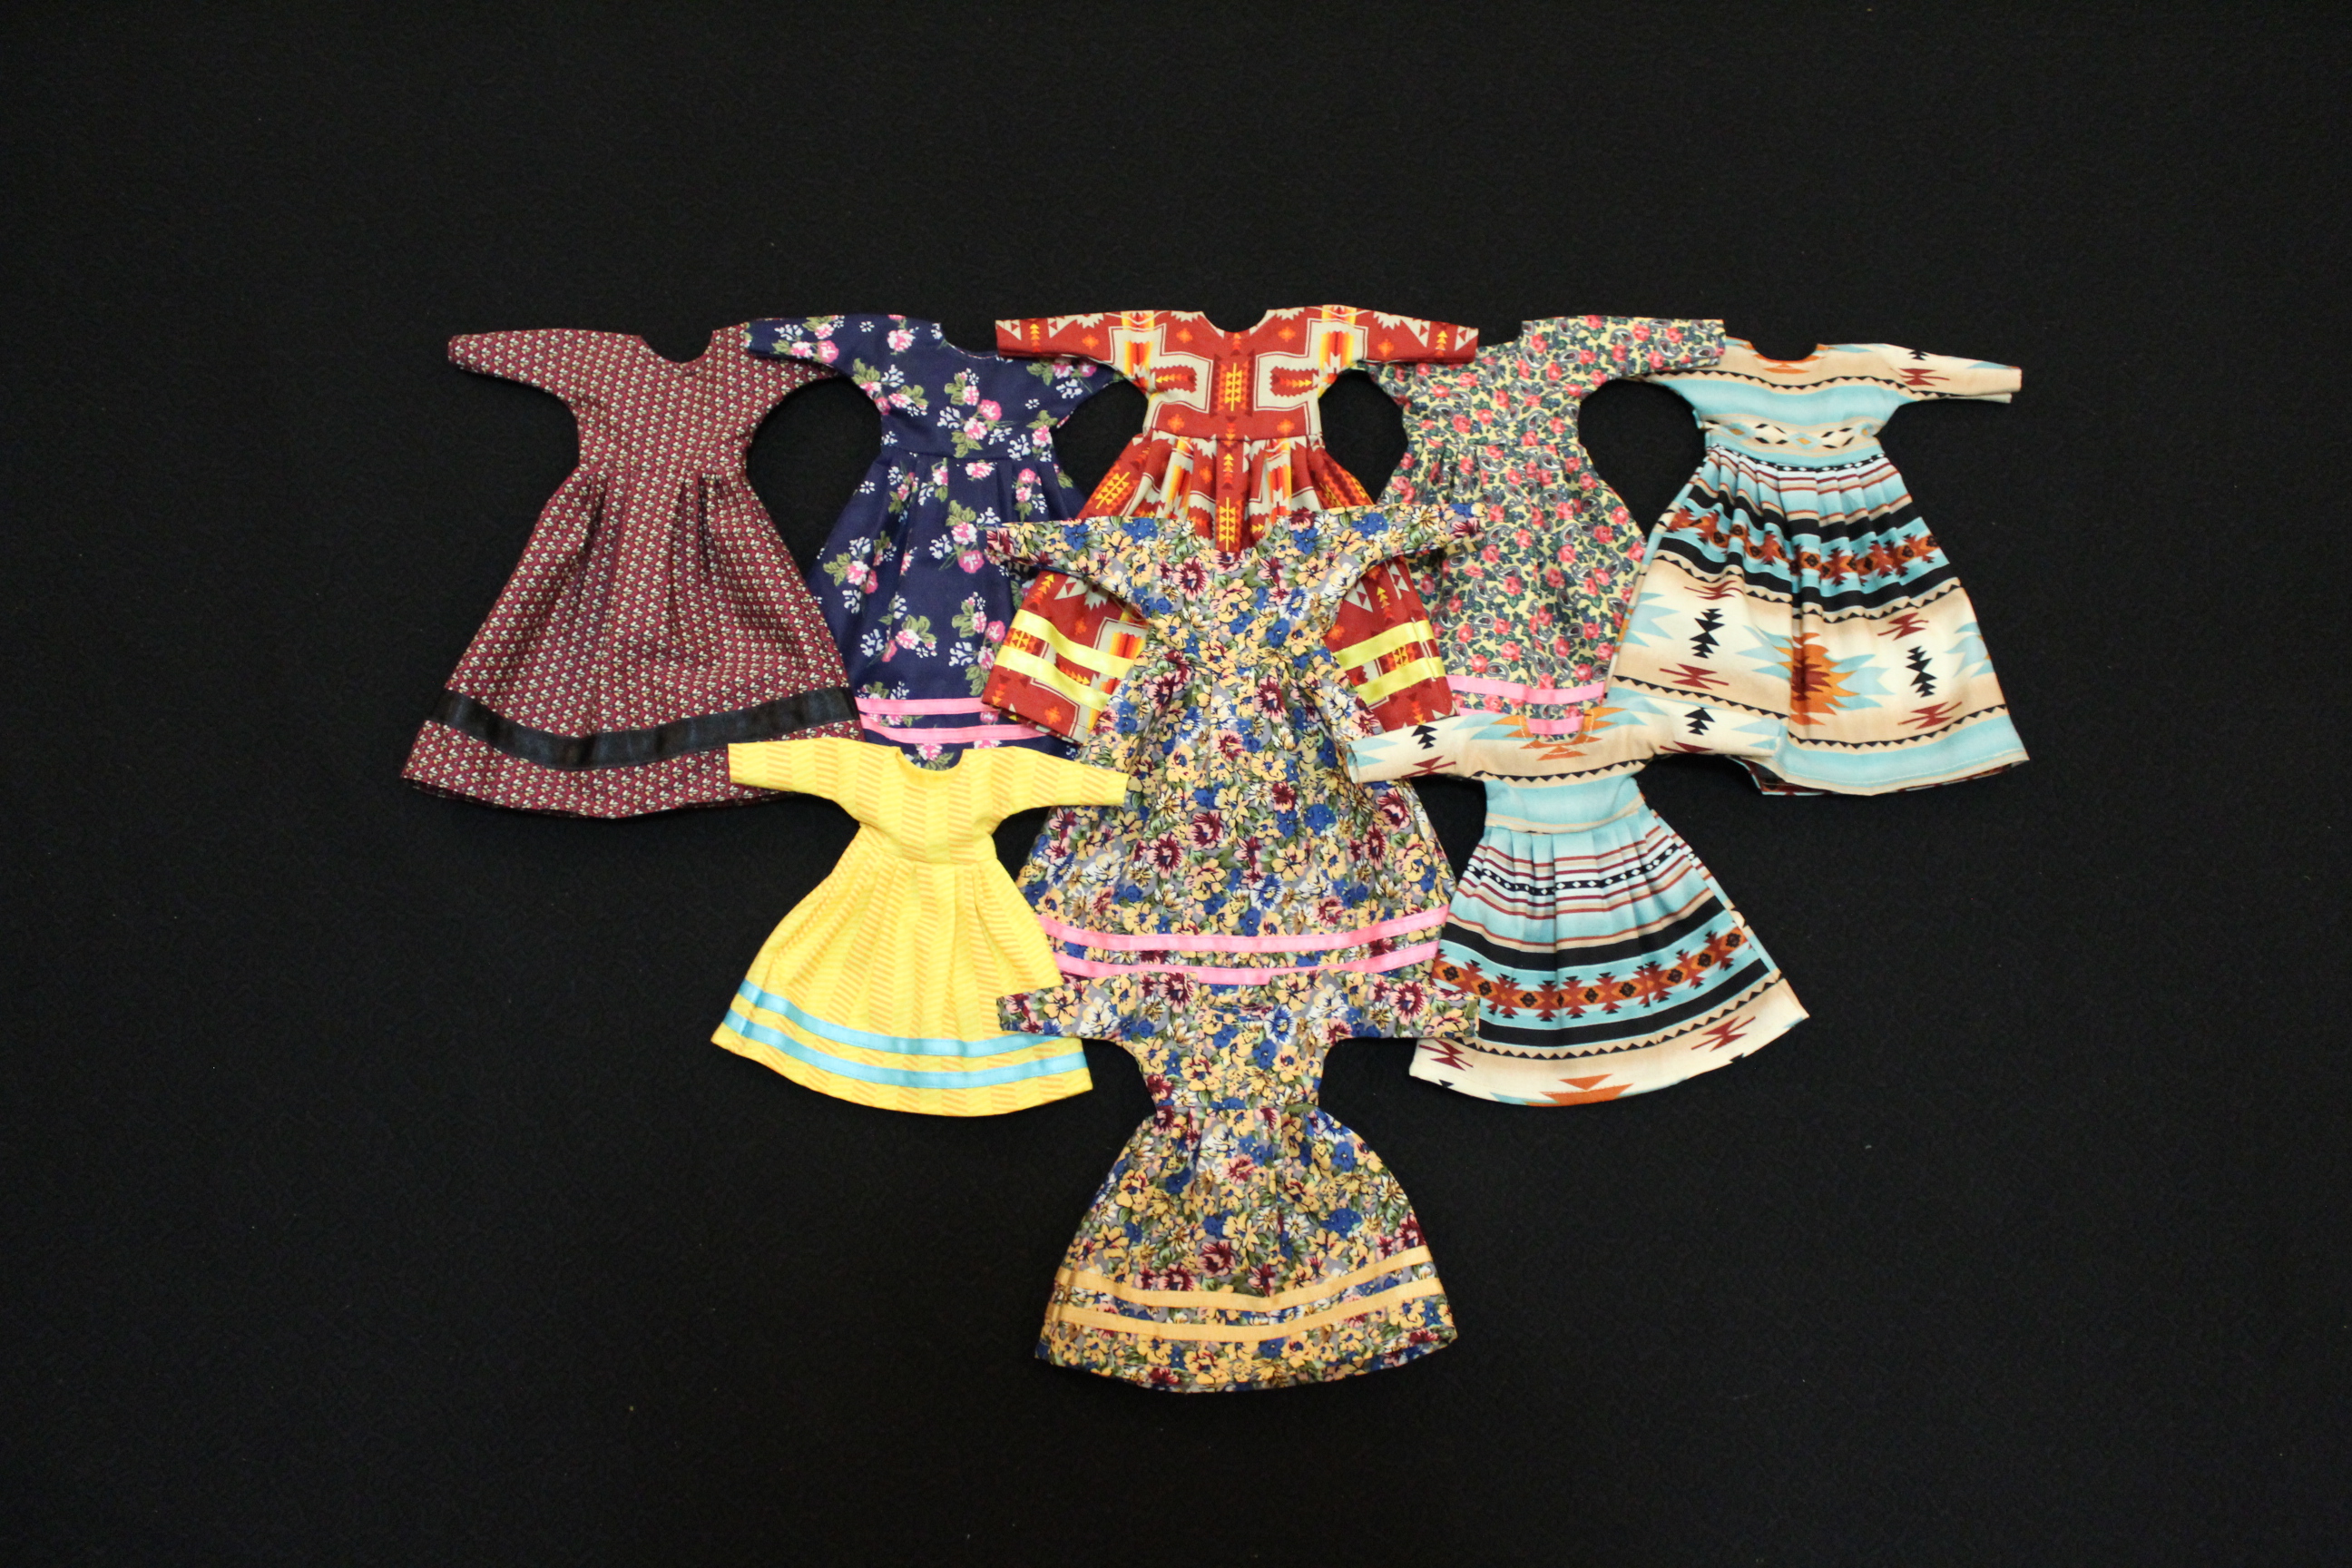 A closer look at the miniature dresses